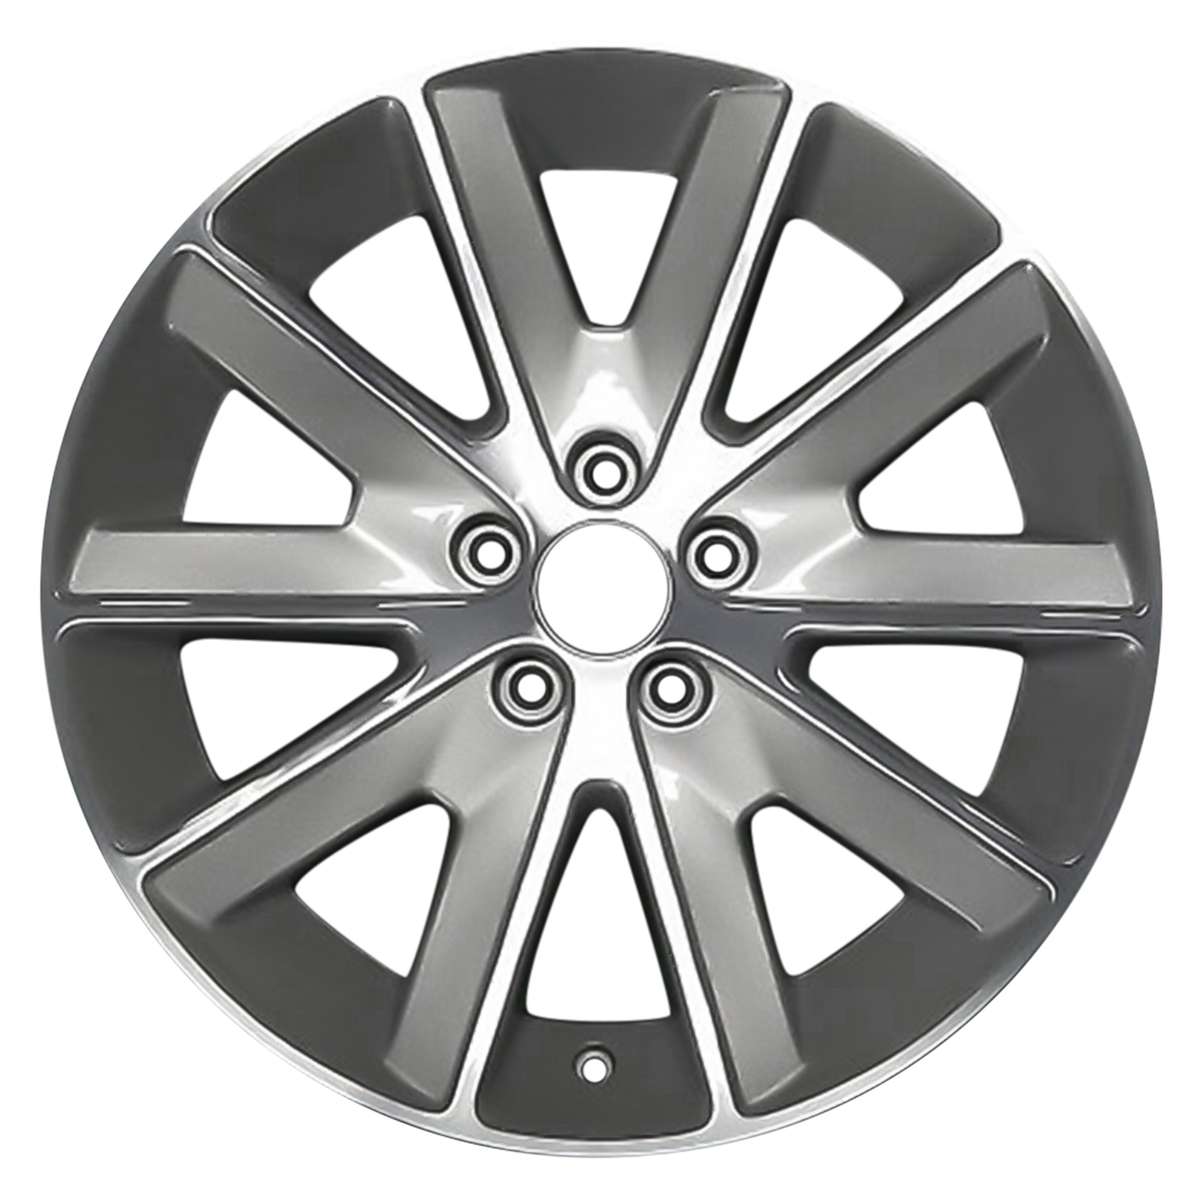 2013 Lincoln MKT 18" OEM Wheel Rim W10155H